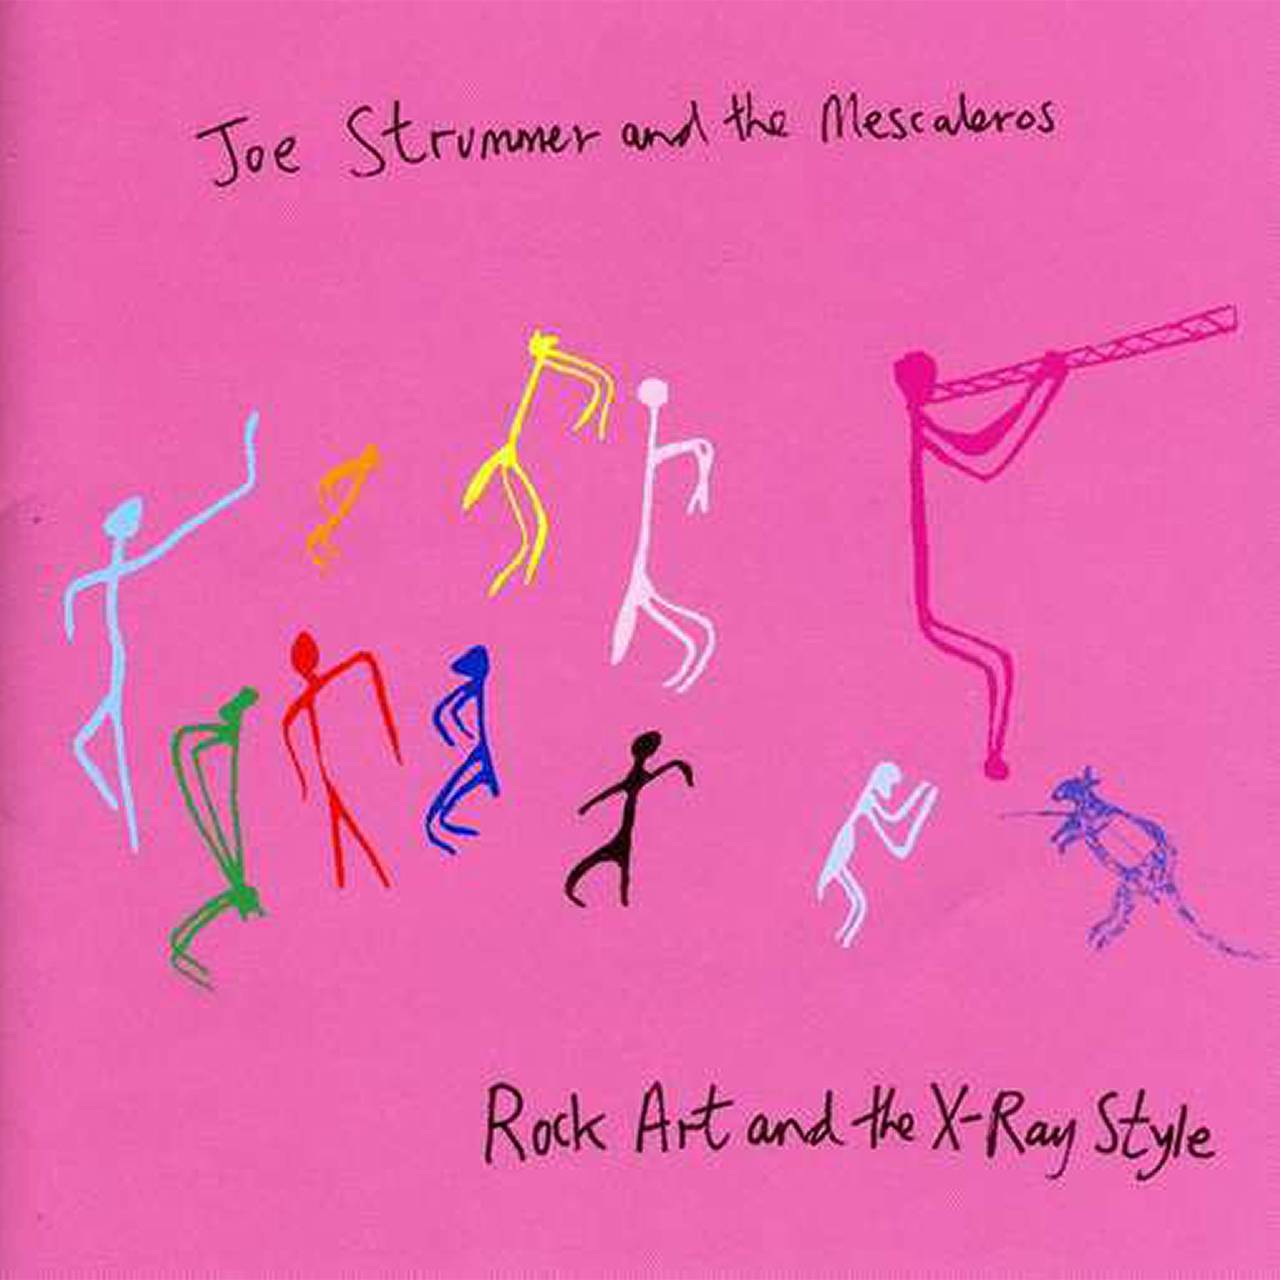 Joe Strummer & Mescaleros - Rock Art & The X-Ray Style